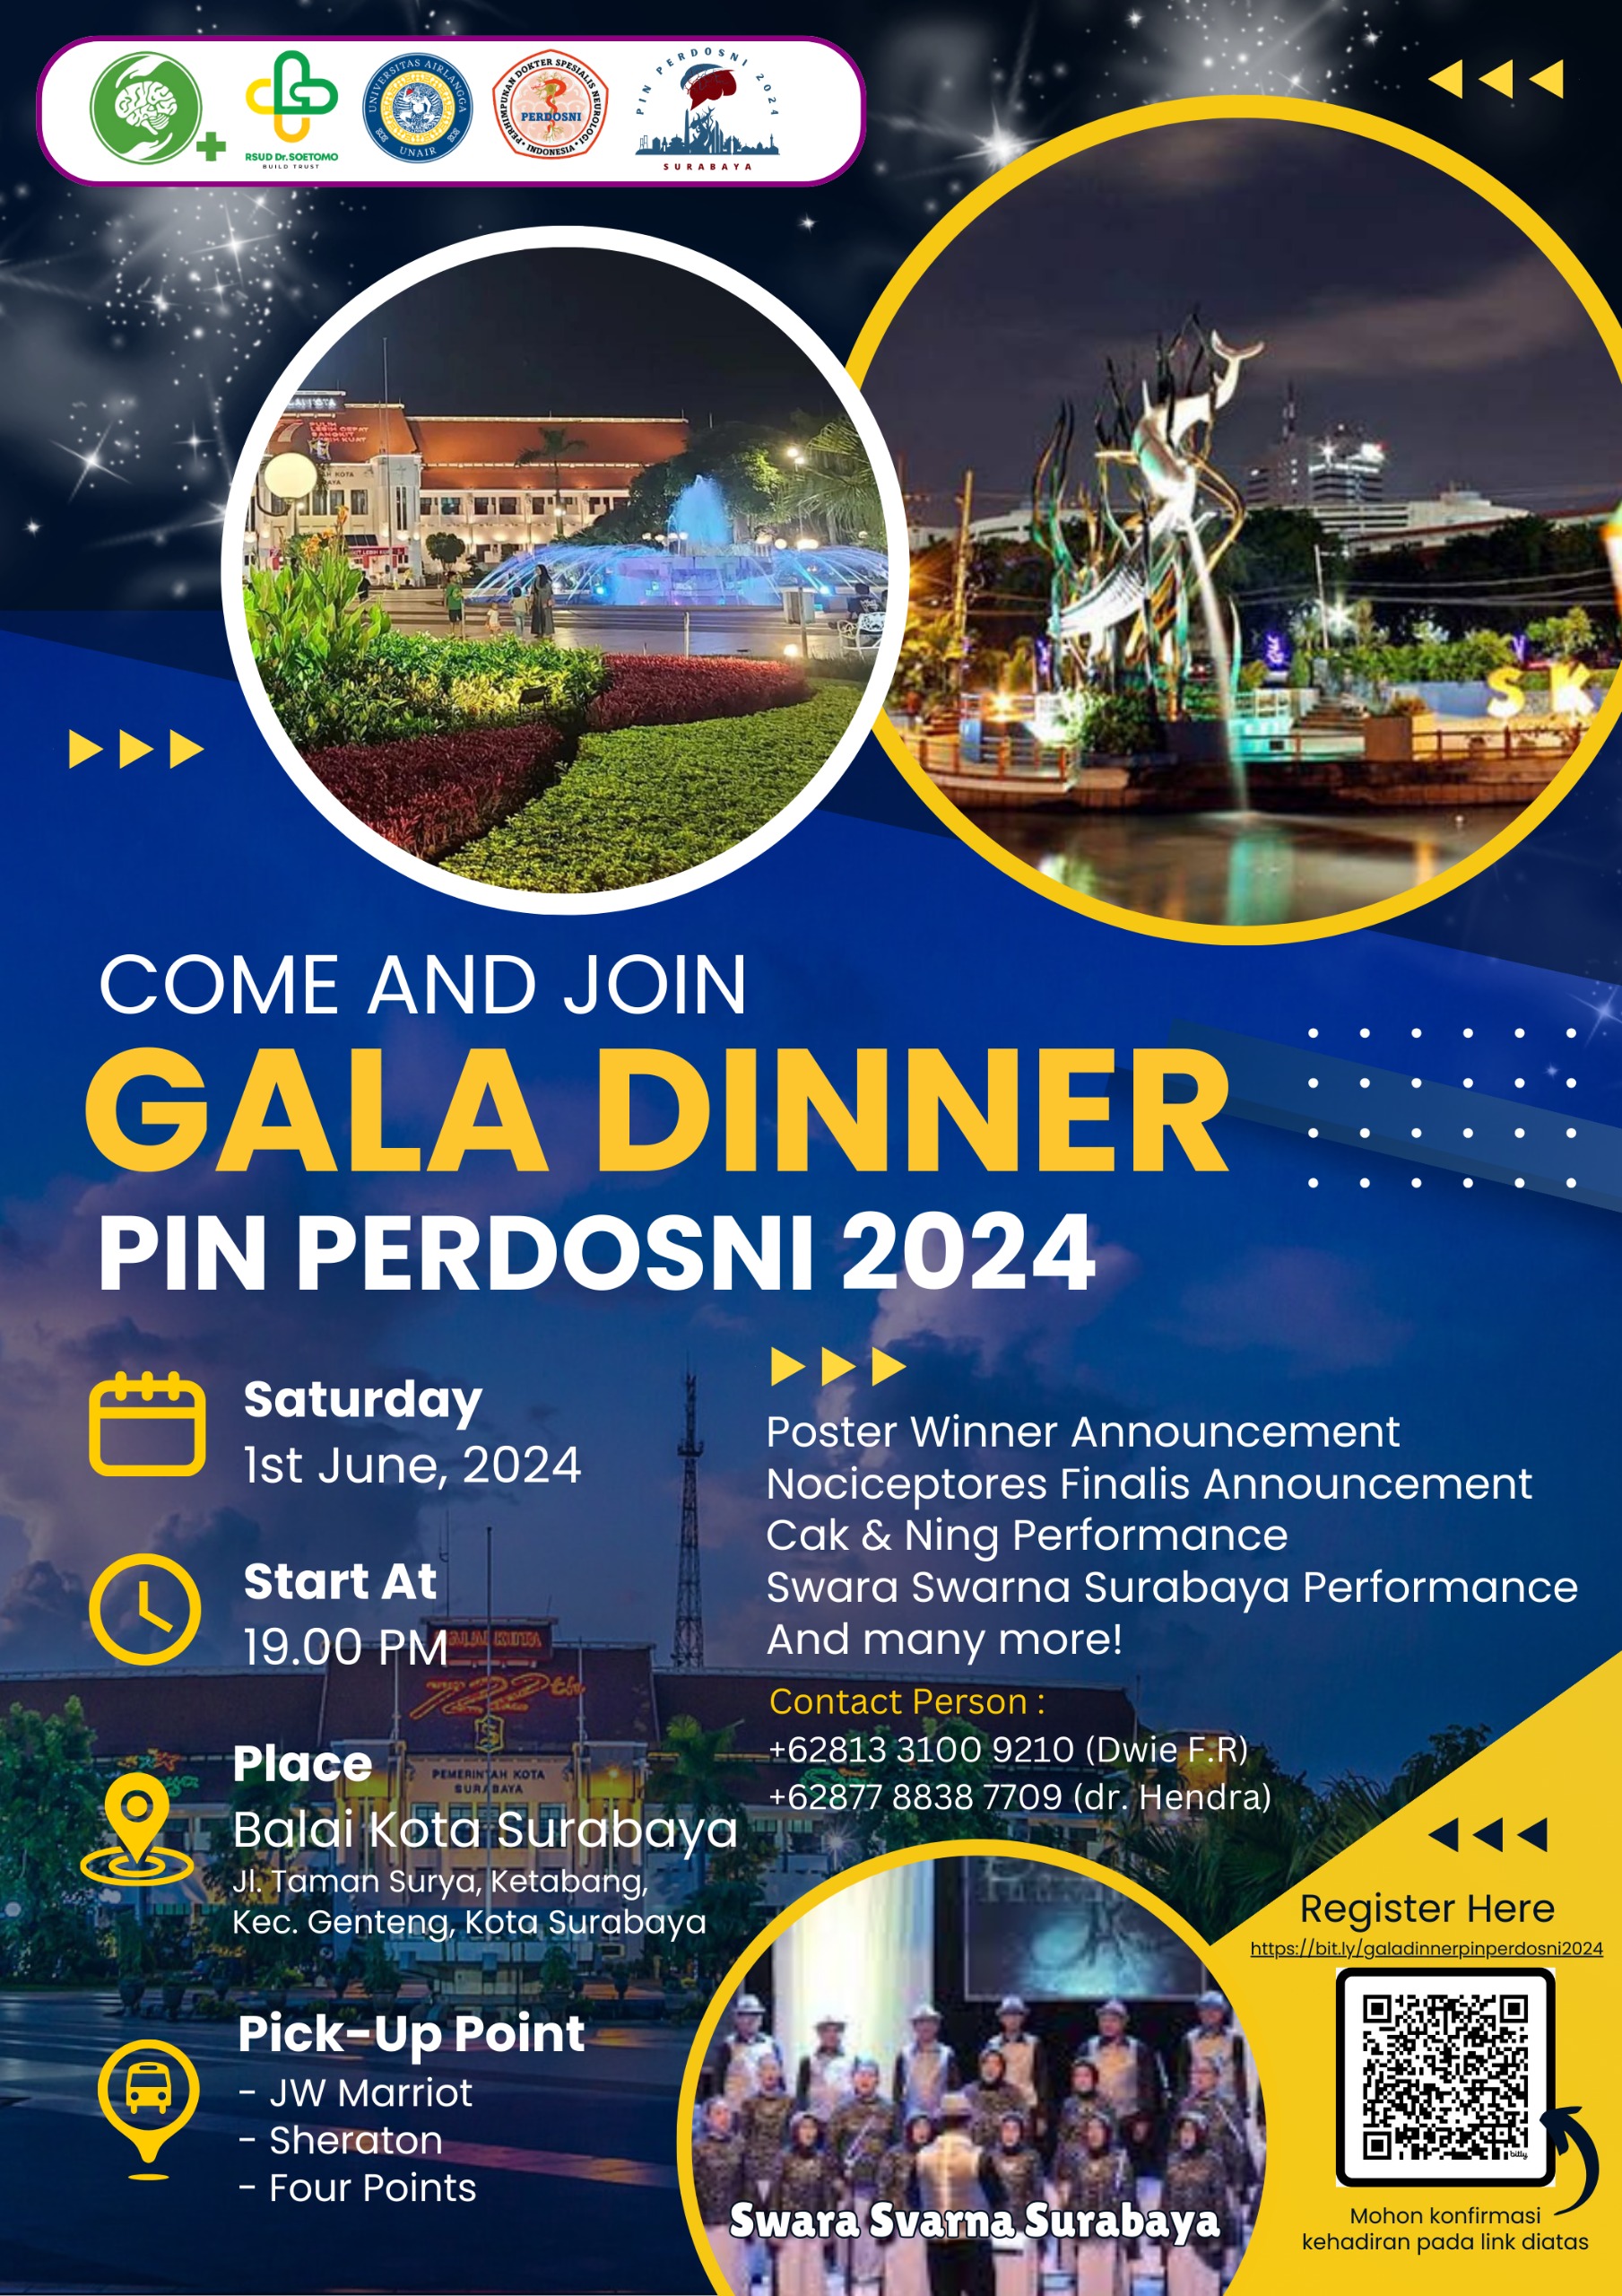 Gala-Dinner-PIN-Perdosni-2024